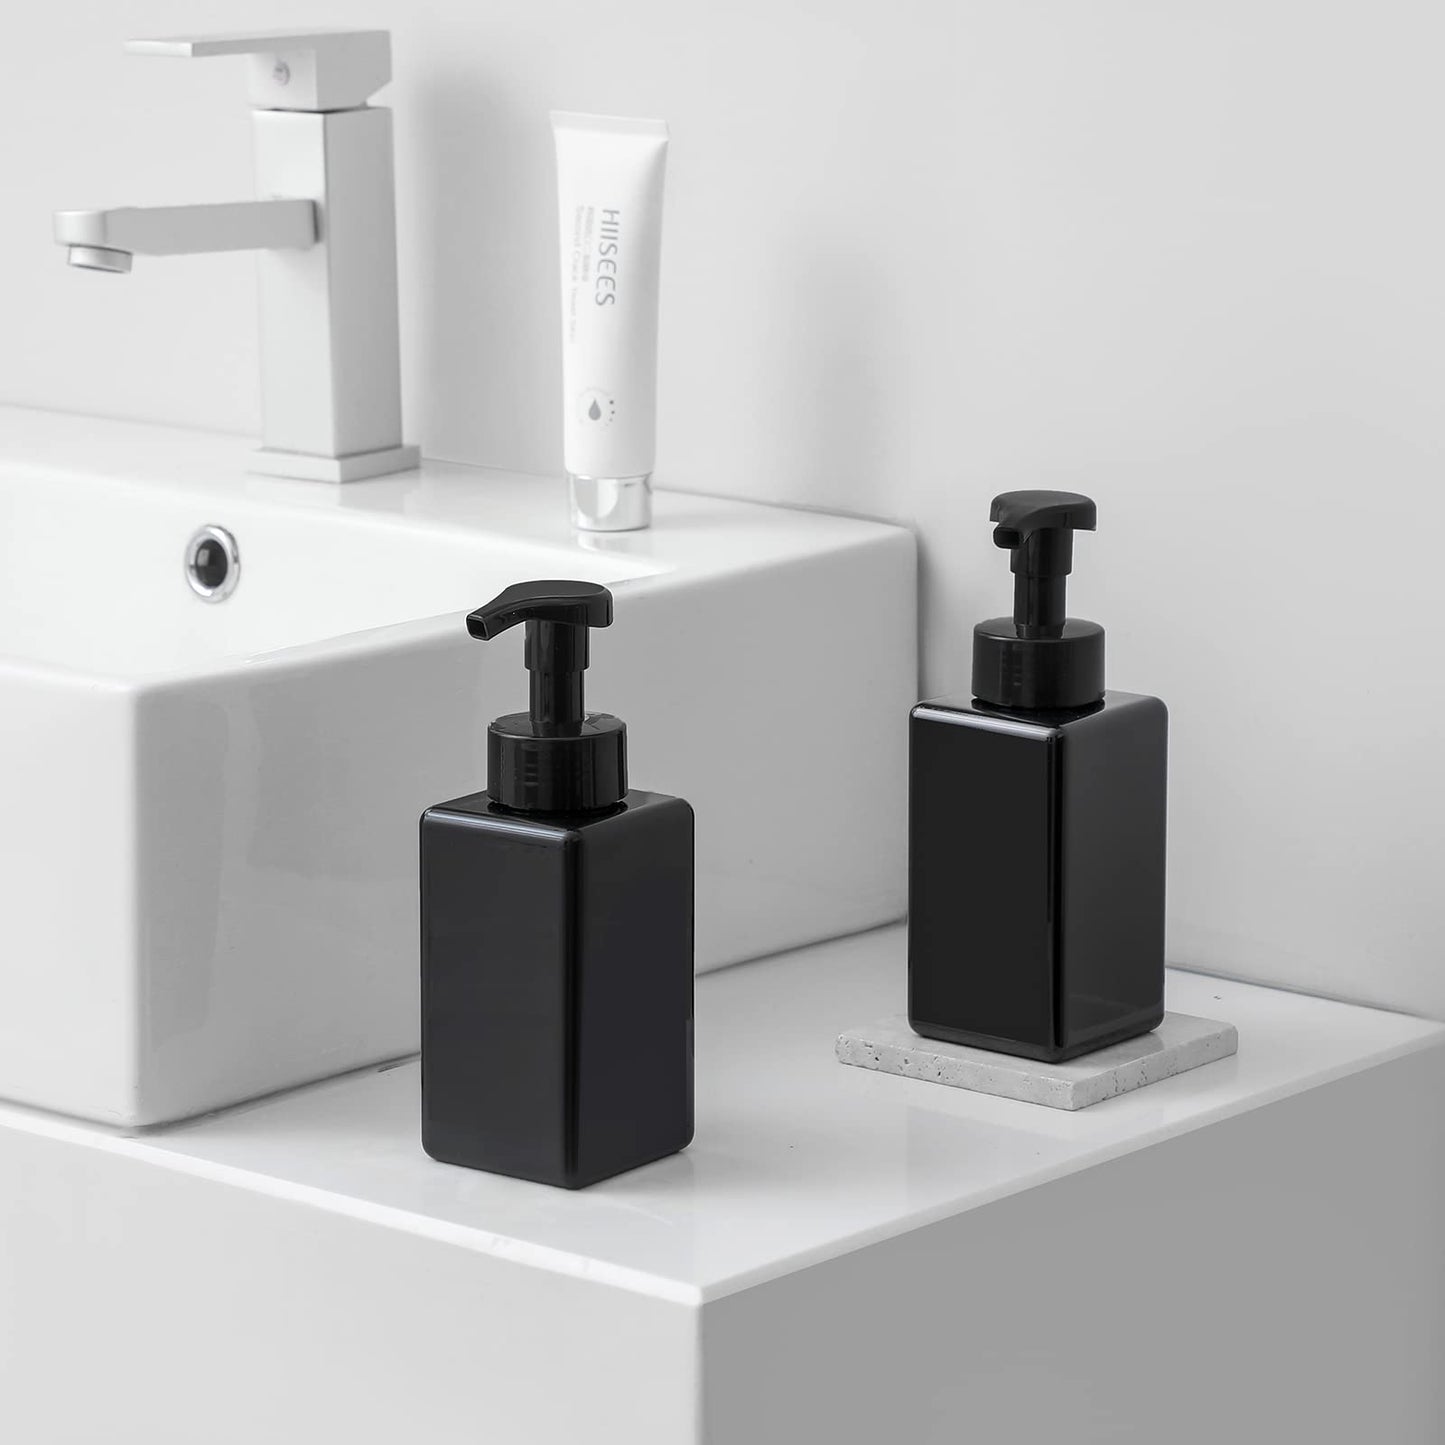 UUJOLY Foaming Soap Dispenser, 15oz Refillable Pump Bottle Plastic for Liquid Soap, Shampoo, Body Wash, 2 Pcs, Black